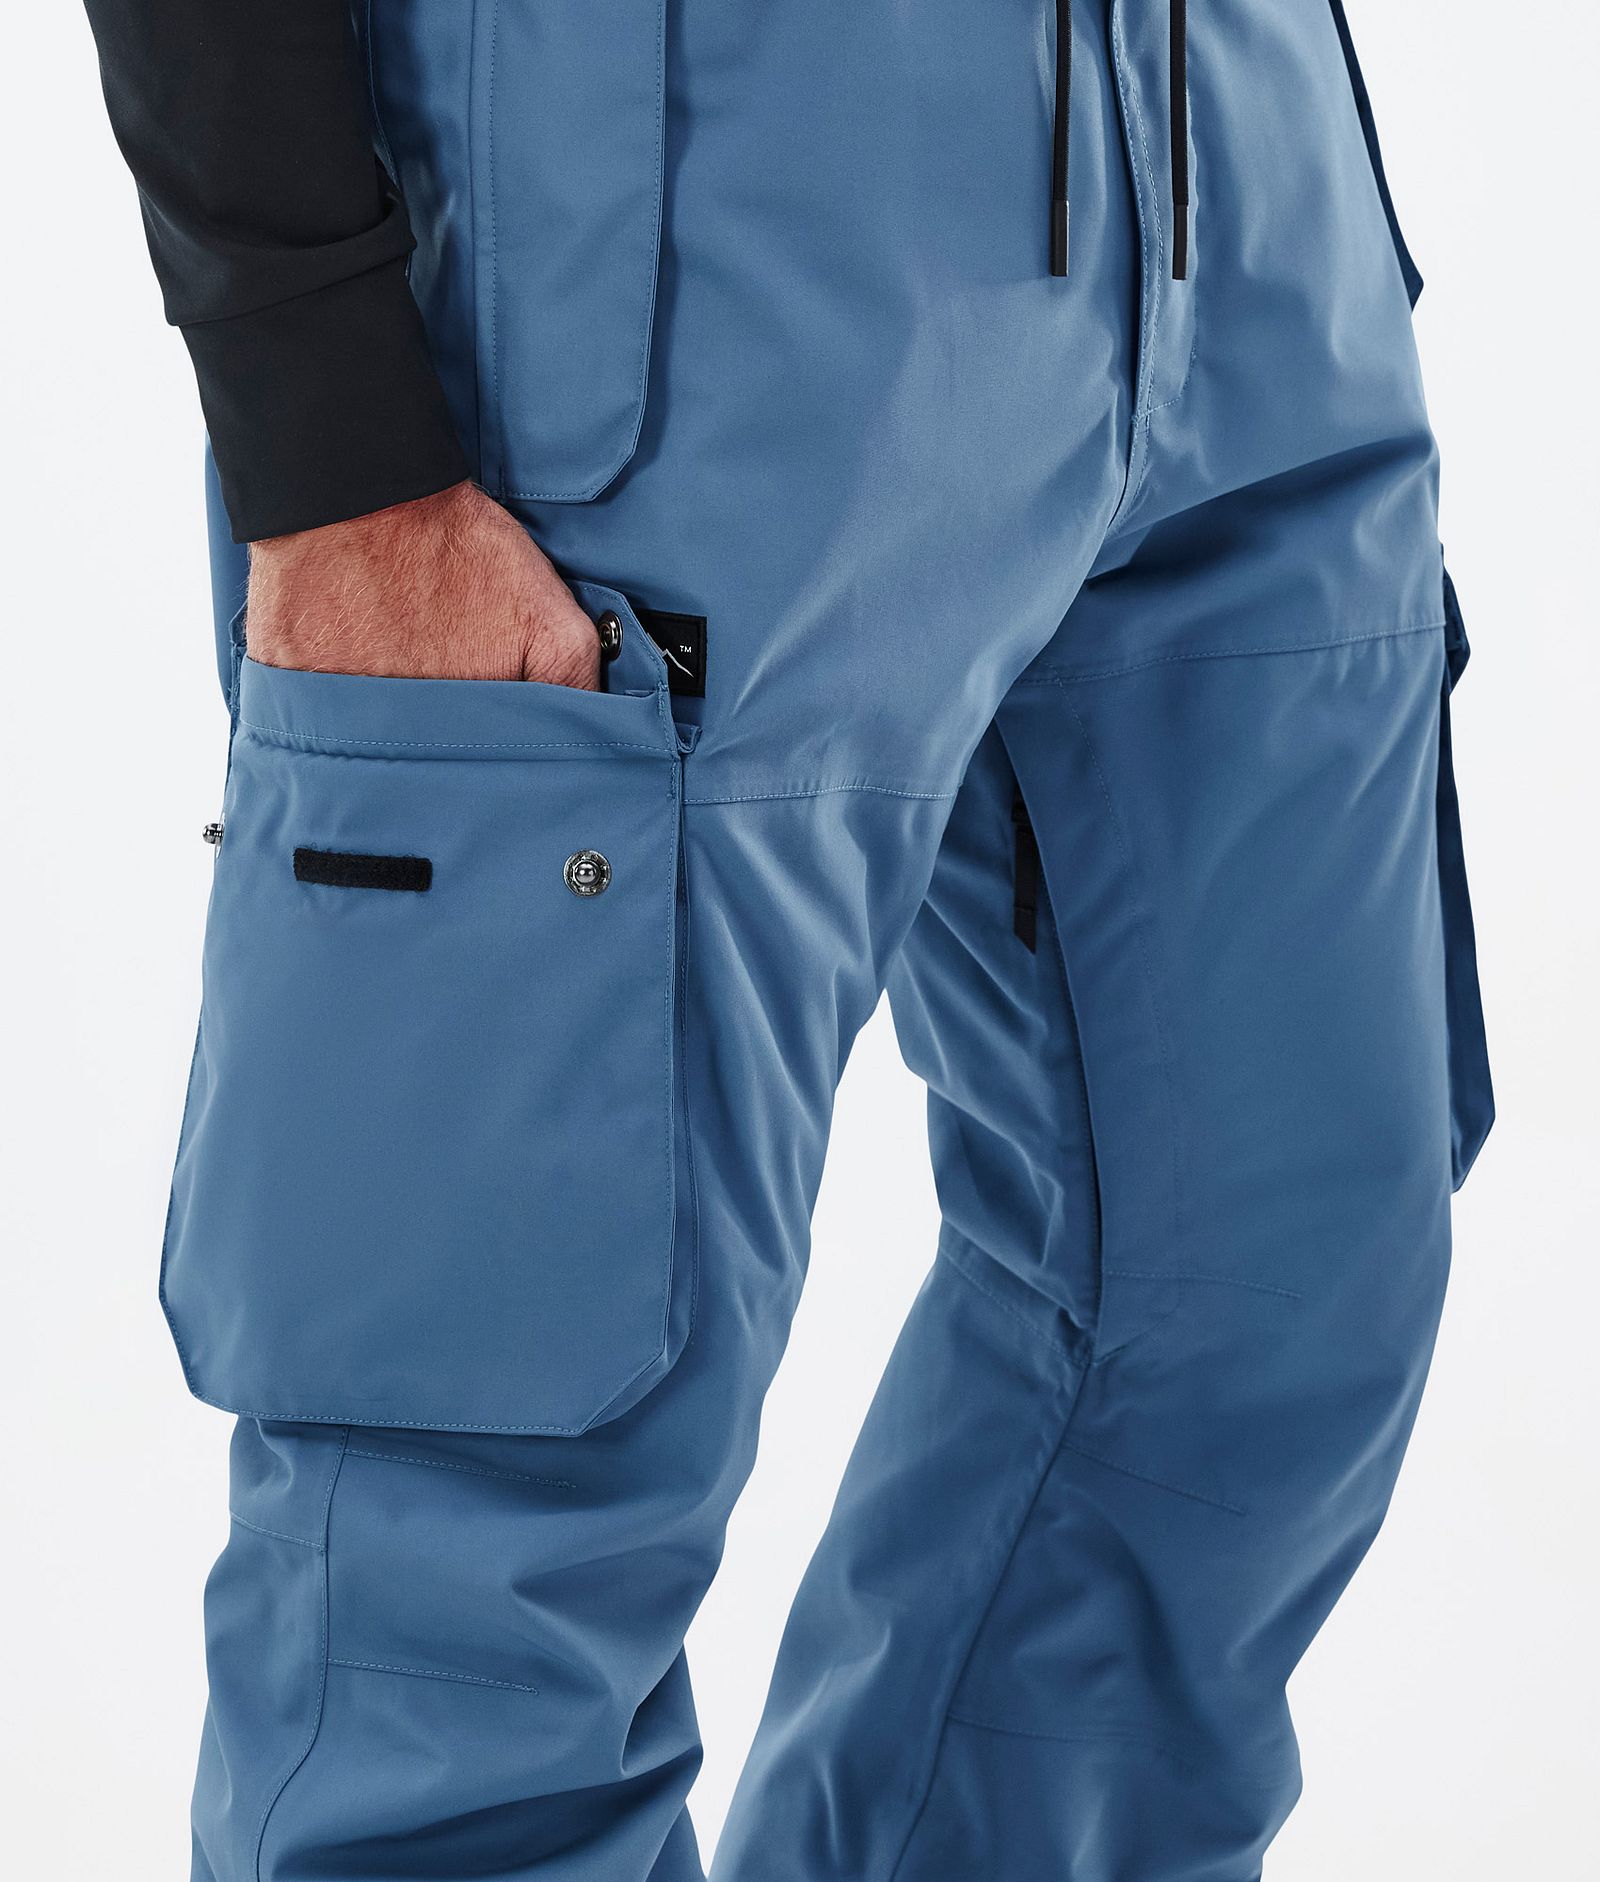 Dope Iconic Pantaloni Snowboard Uomo Blue Steel